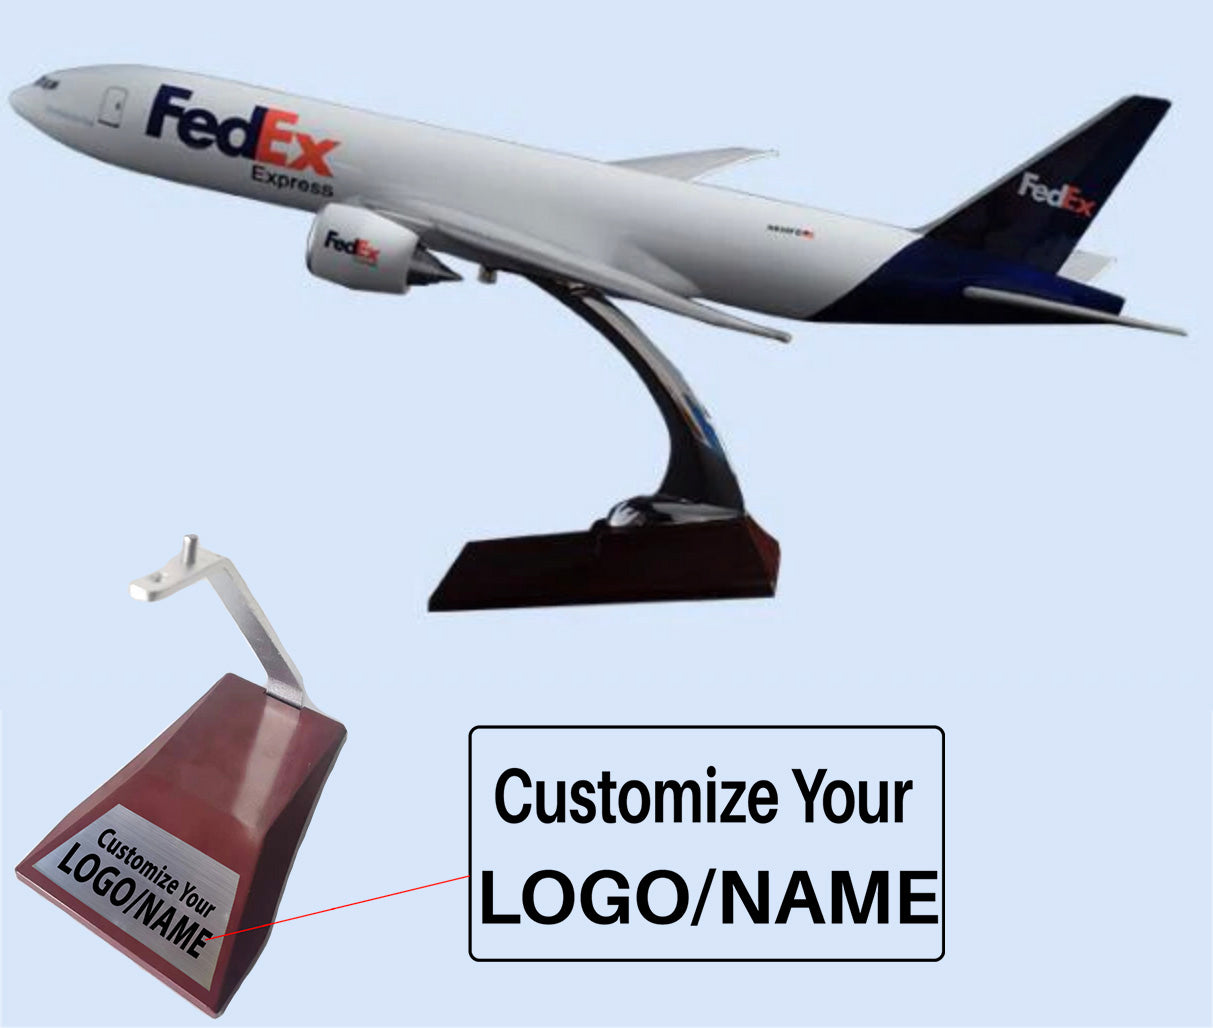 FedEx Cargo Boeing 777 Airplane Model (Handmade 47CM)